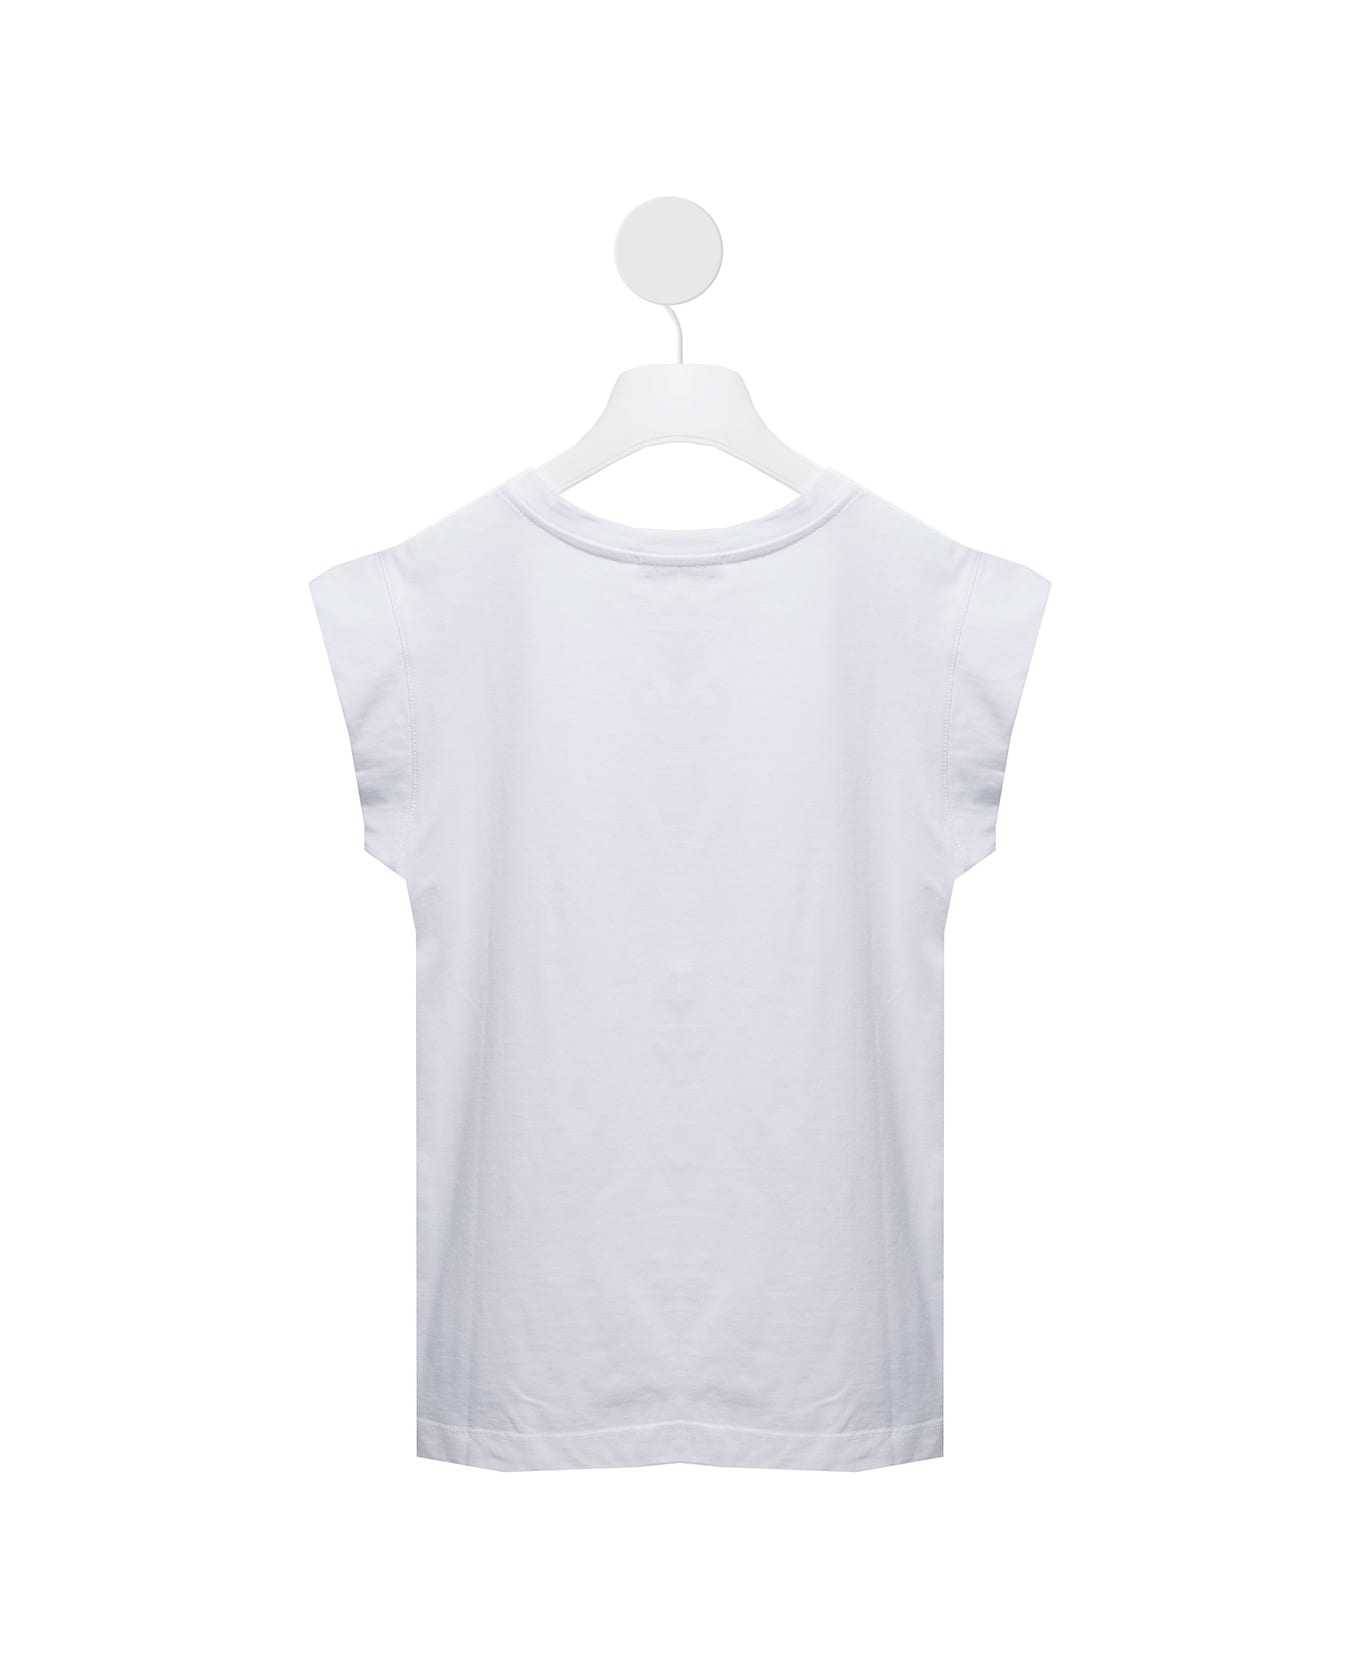 Monnalisa Kids Girl's Maxi White Cotton T-shirt With Print - White